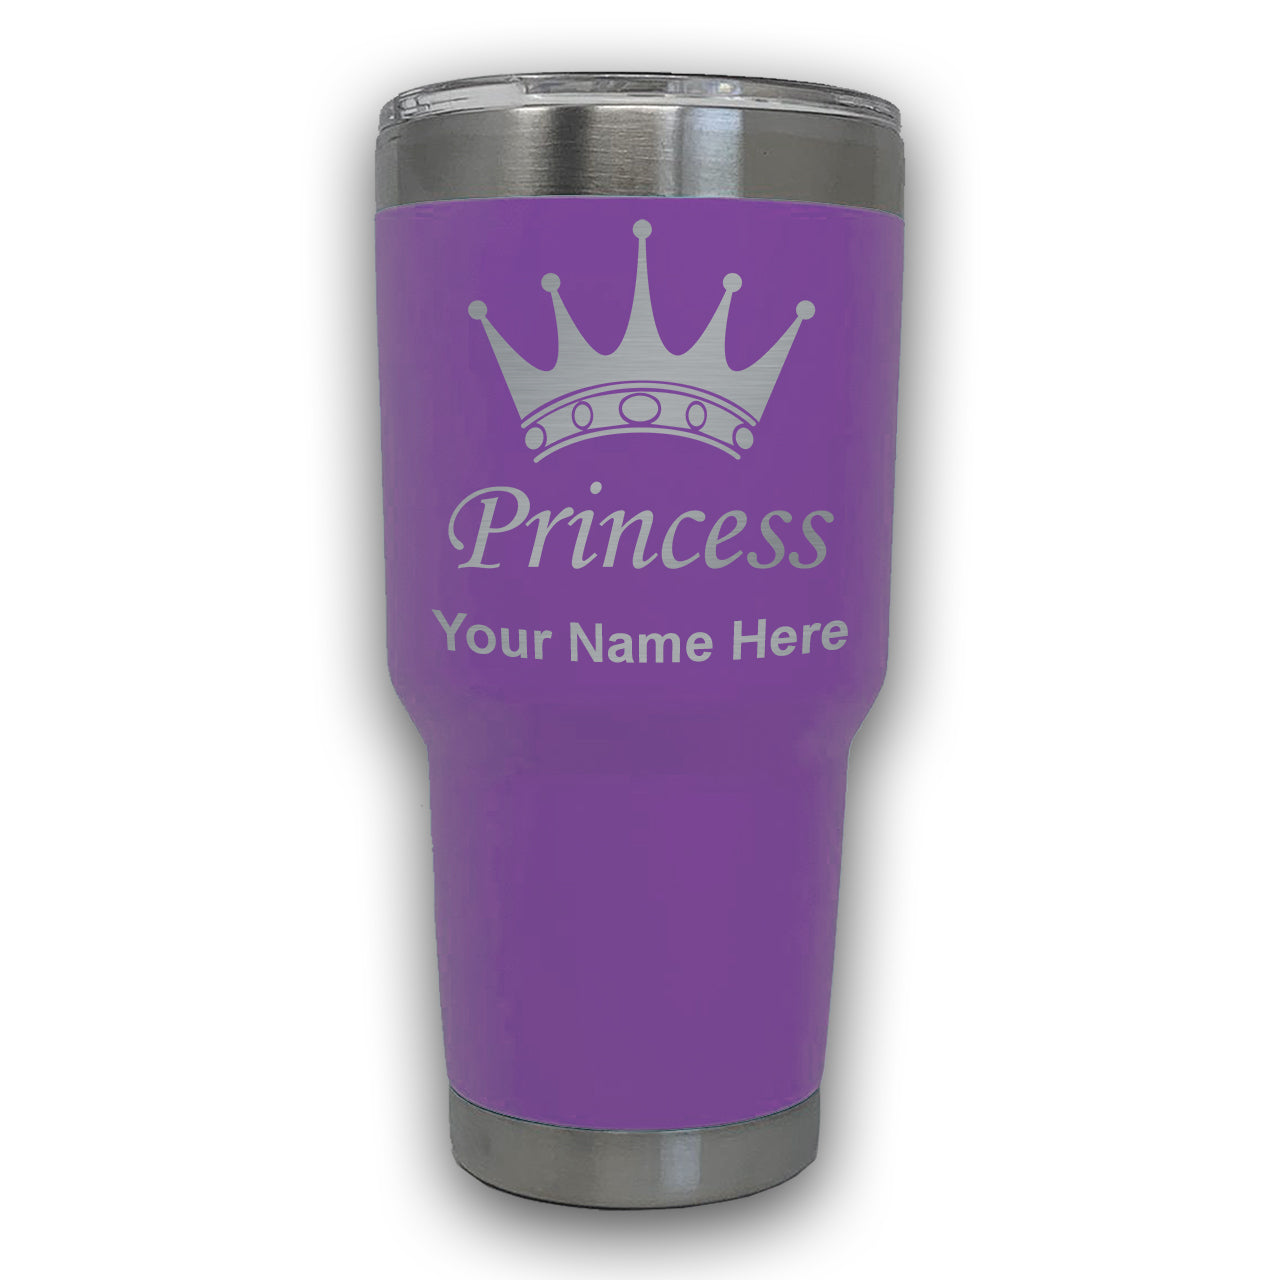 LaserGram 30oz Tumbler Mug, Princess Crown, Personalized Engraving Included